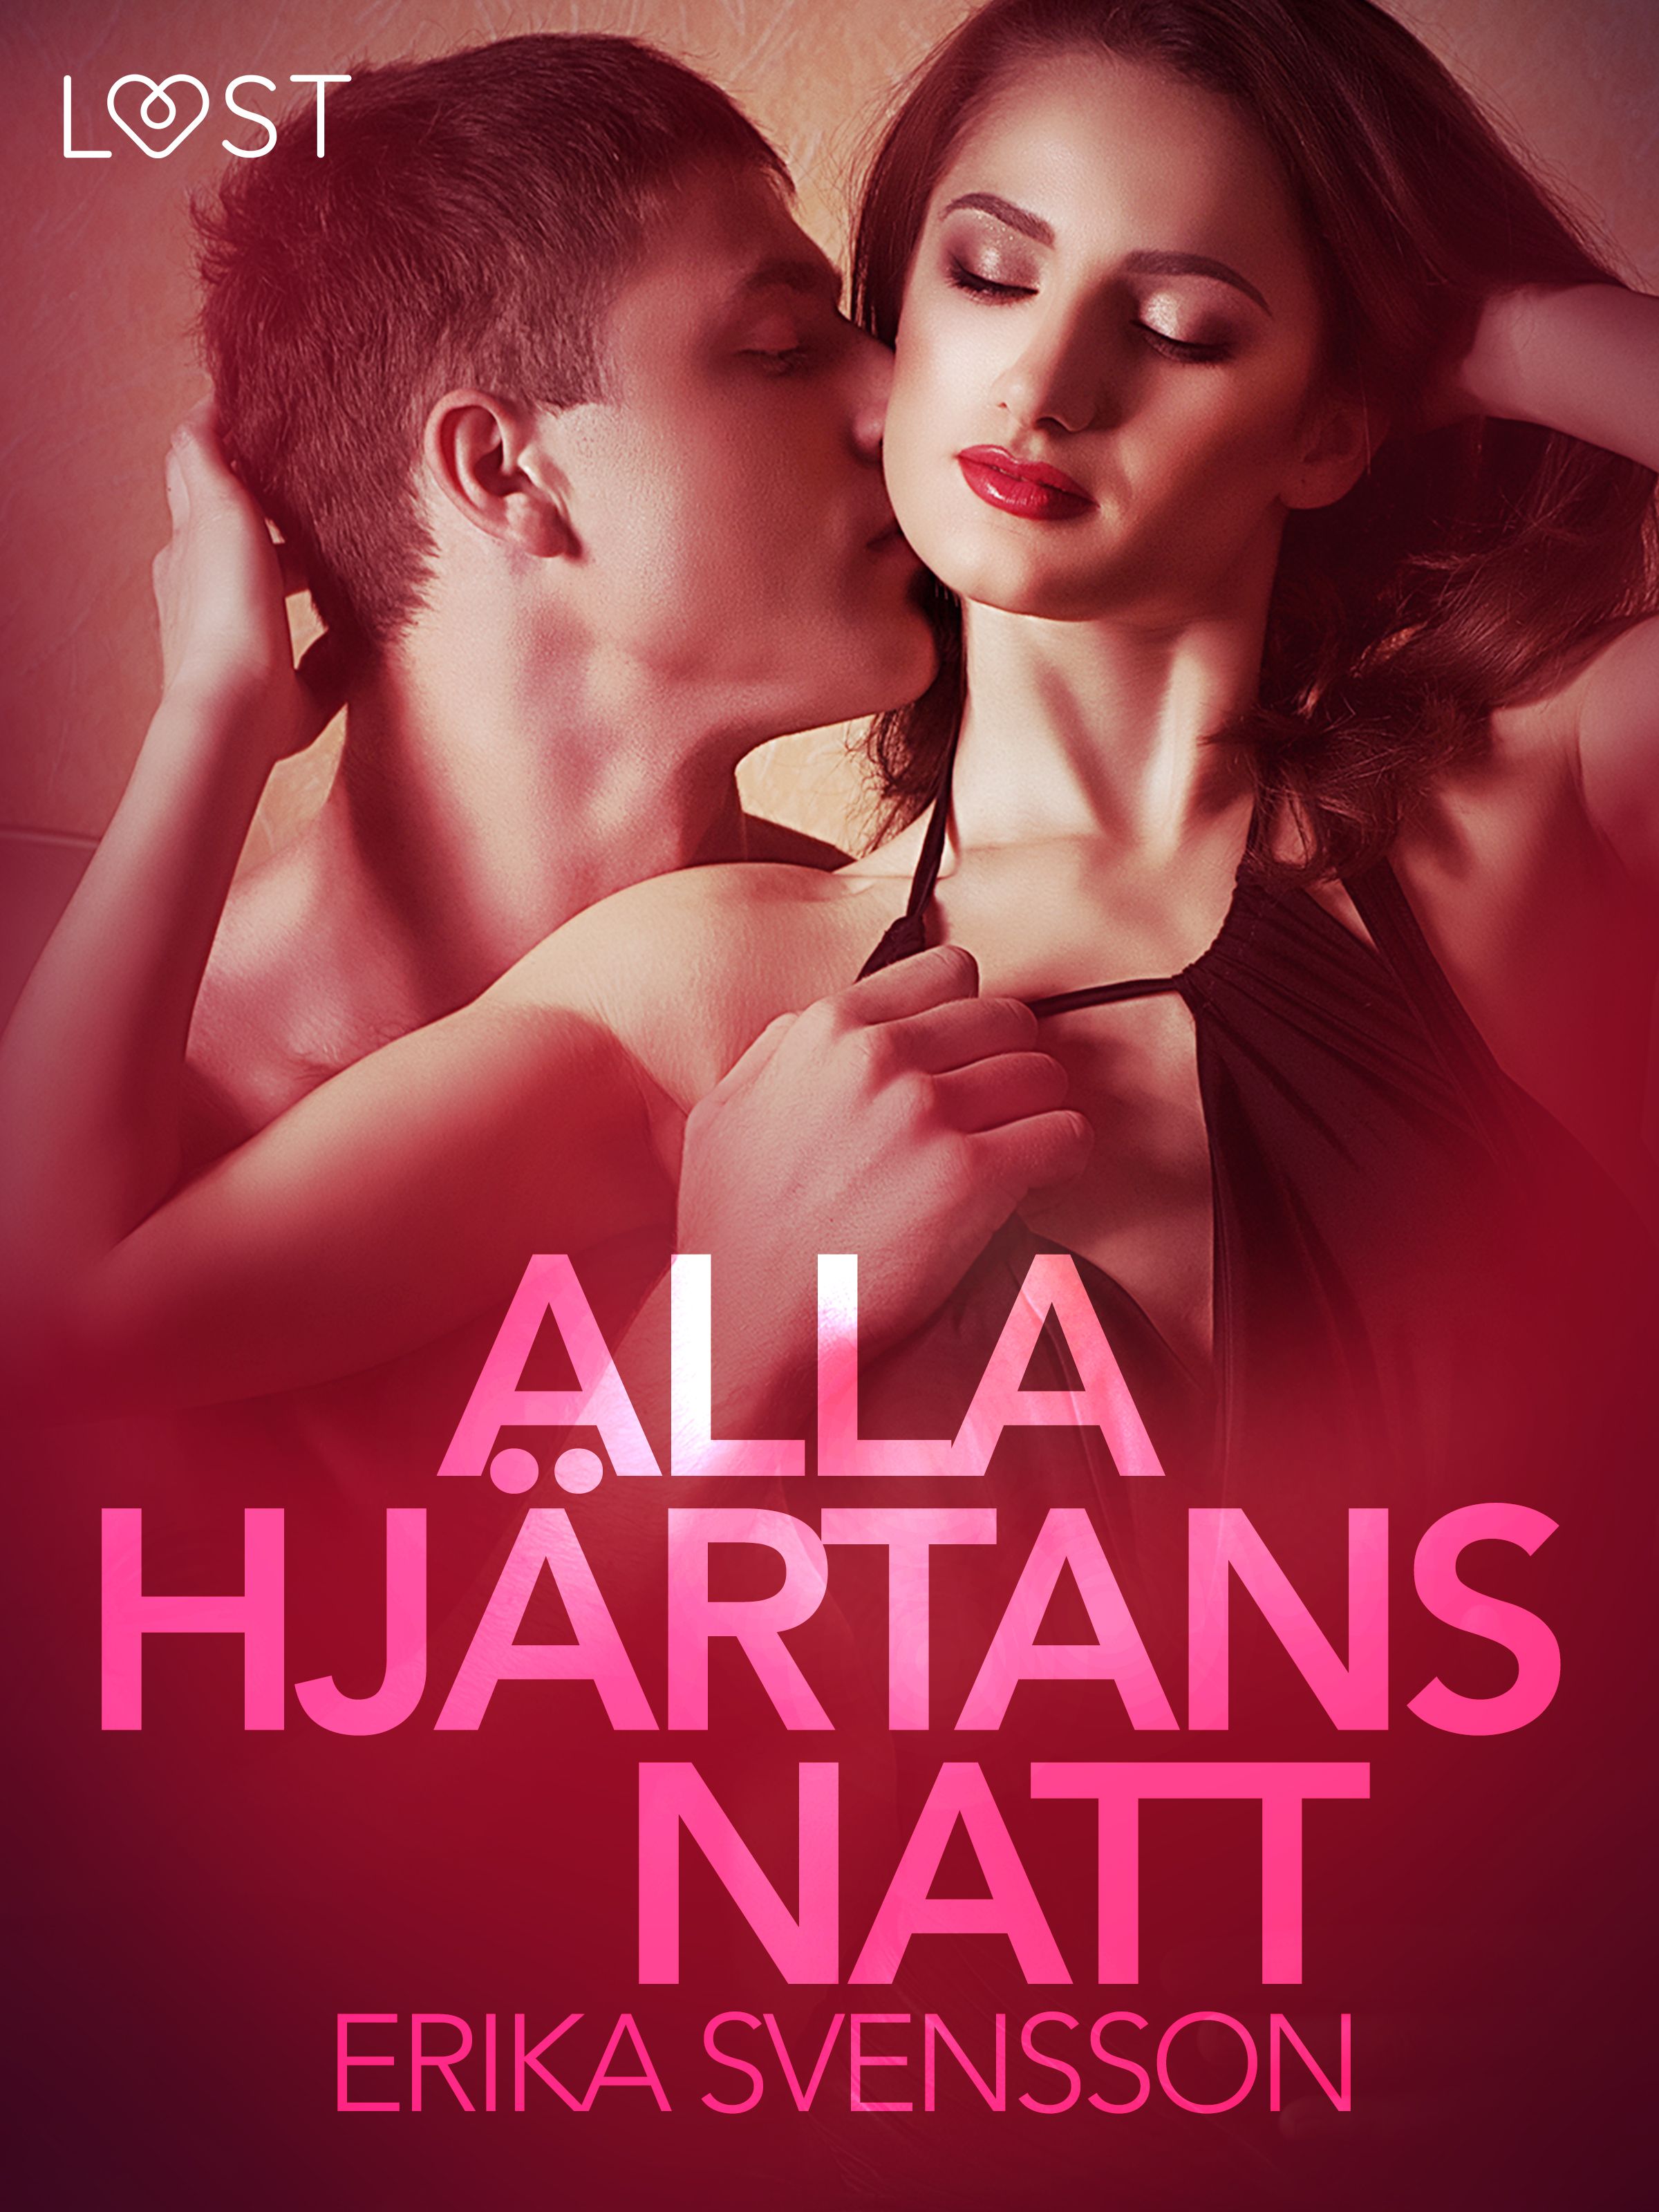 Alla hjärtans natt - erotisk novell, e-bog af Katja Slonawski